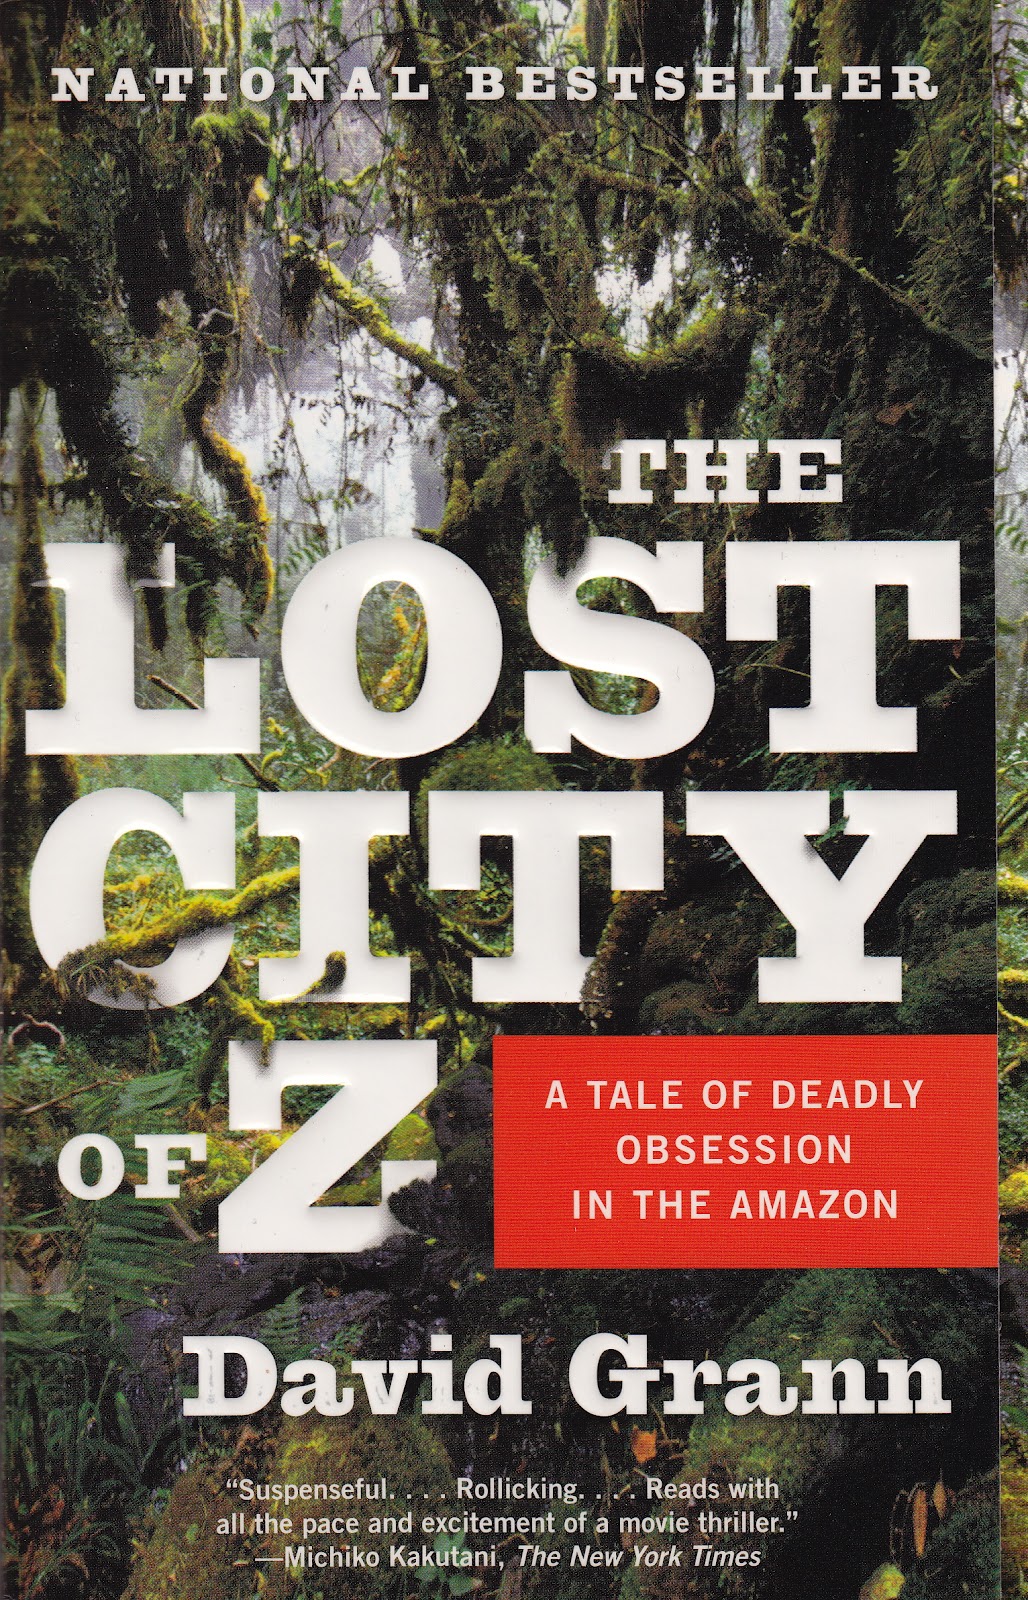 David Grann: The Lost City of Z (2009, Doubleday)